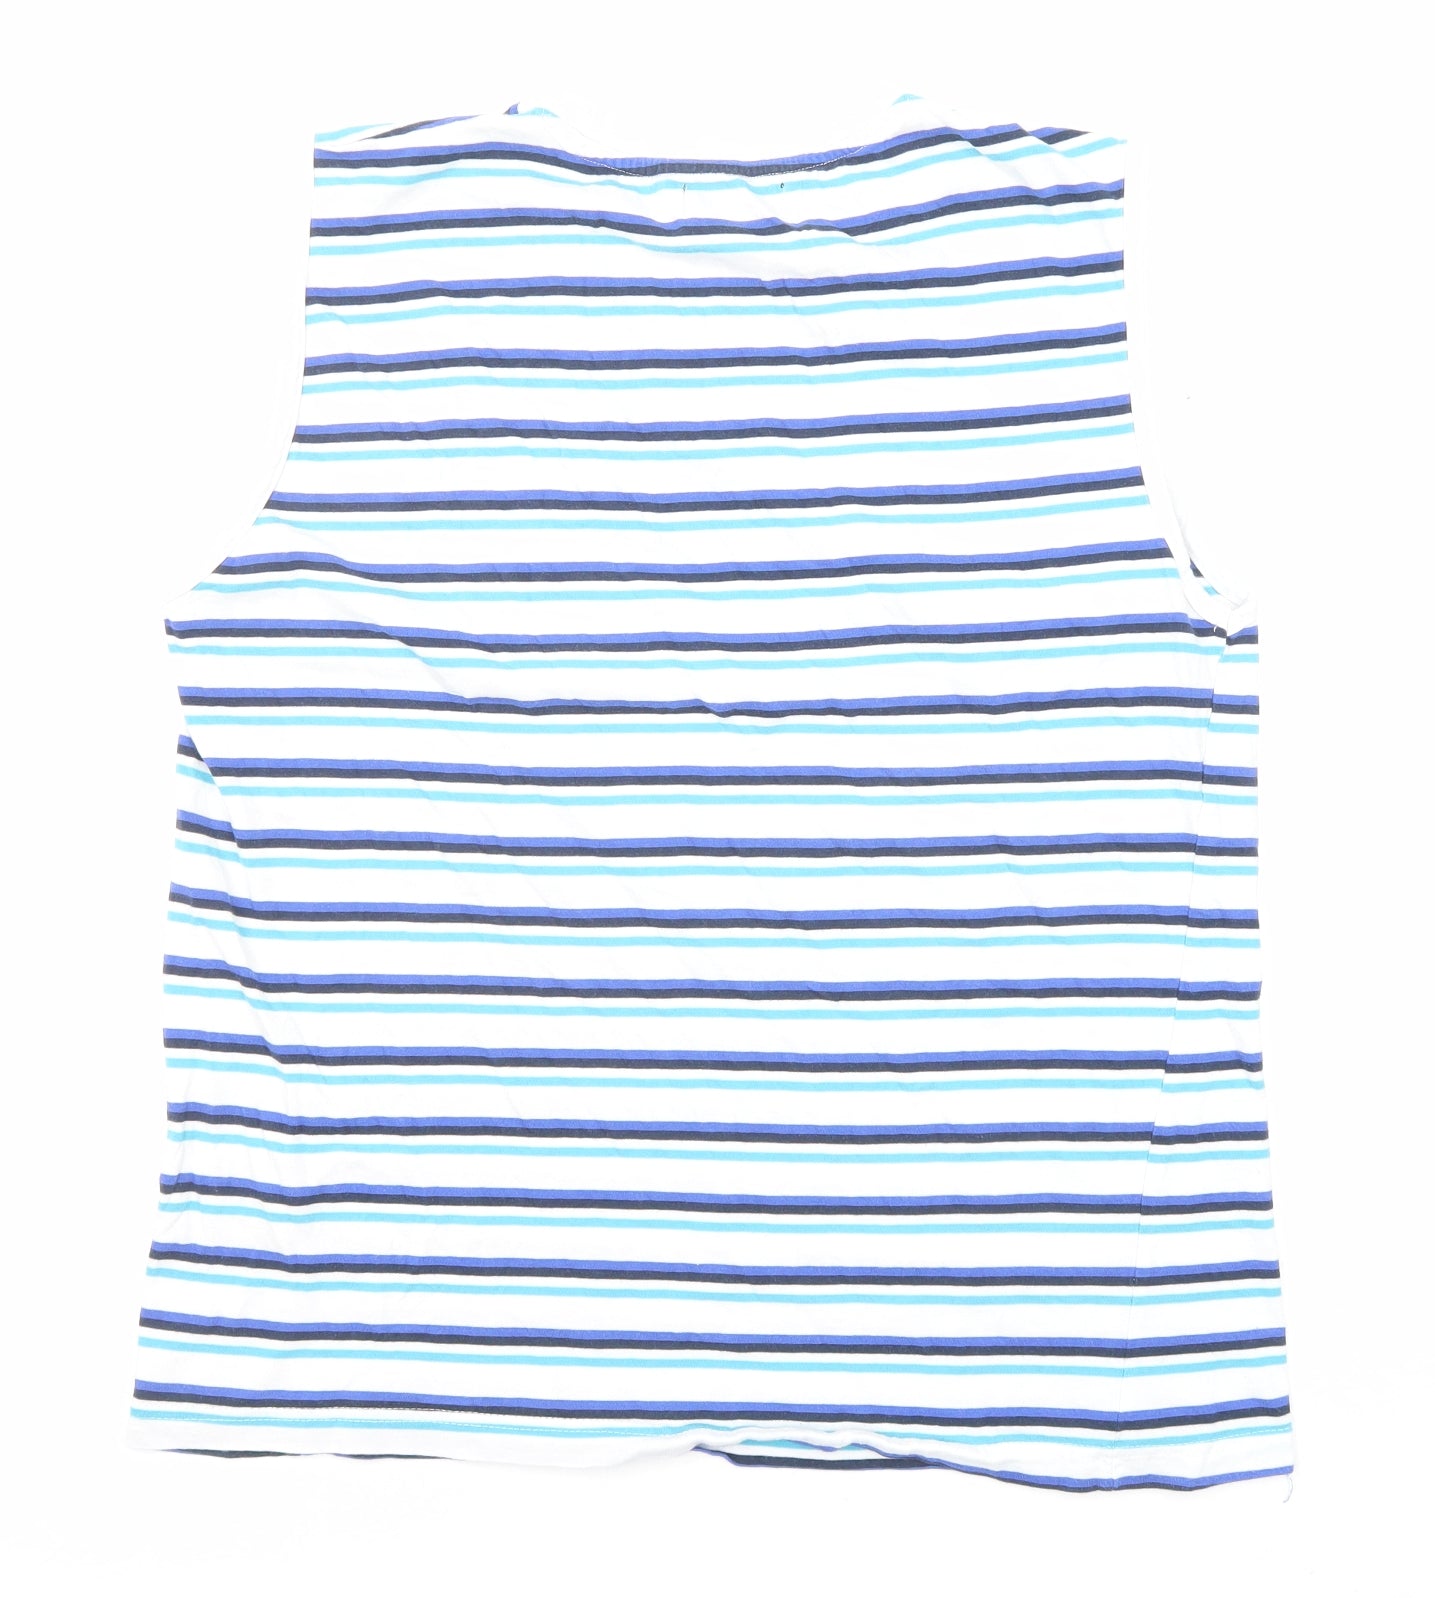 Pierre Cardin Mens Multicoloured Striped Cotton T-Shirt Size L Crew Neck